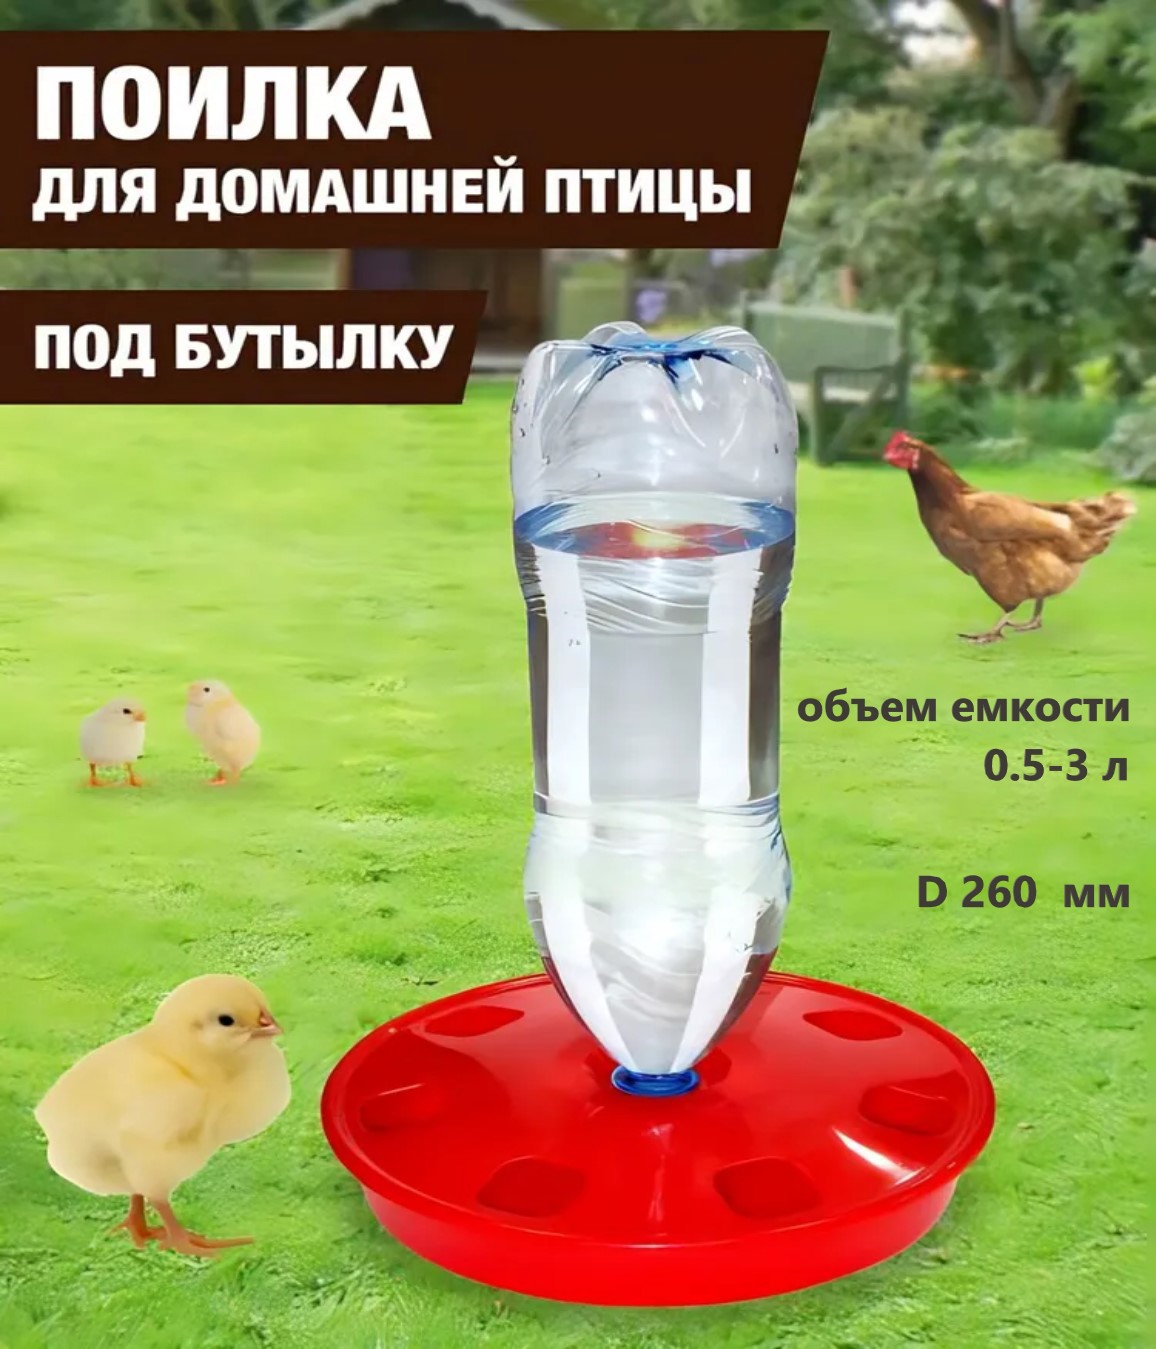 91067585 Поилка для домашней птицы под бутылку d 260мм от 0.5 до 3 л STLM-0466391 МИЛИХ ПЛАСТИК